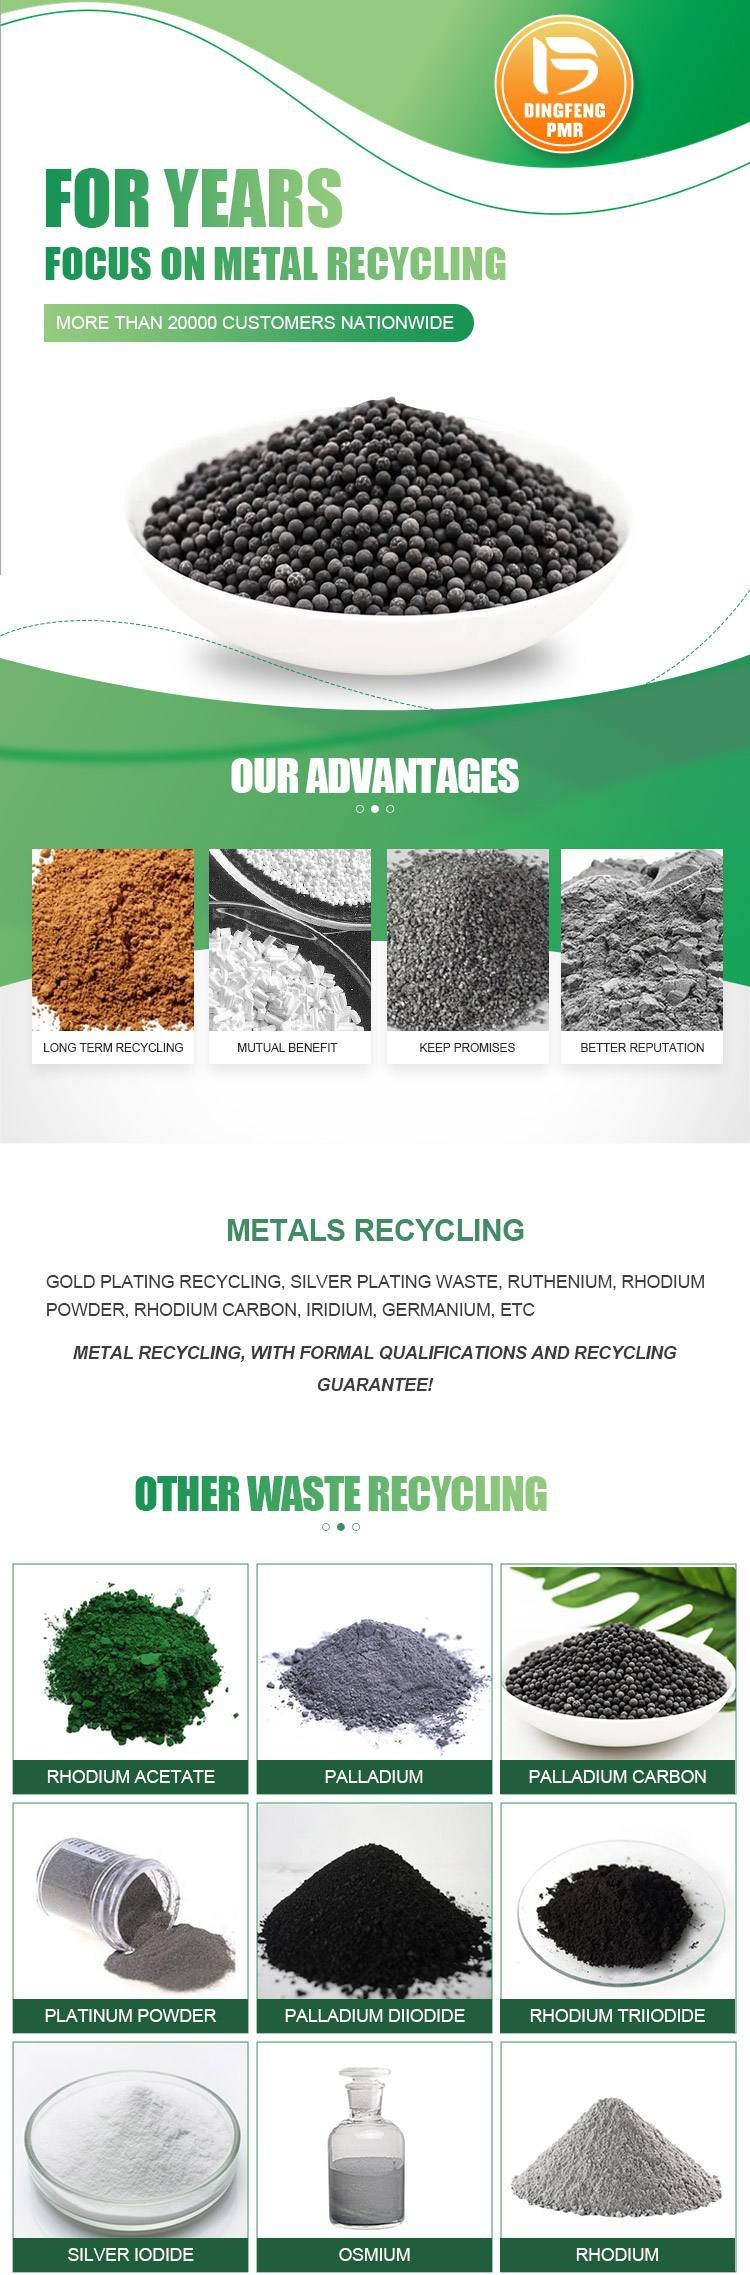 Recycling of waste indium powder, indium flakes, platinum scraps, recycling of platinum waste, price guarantee